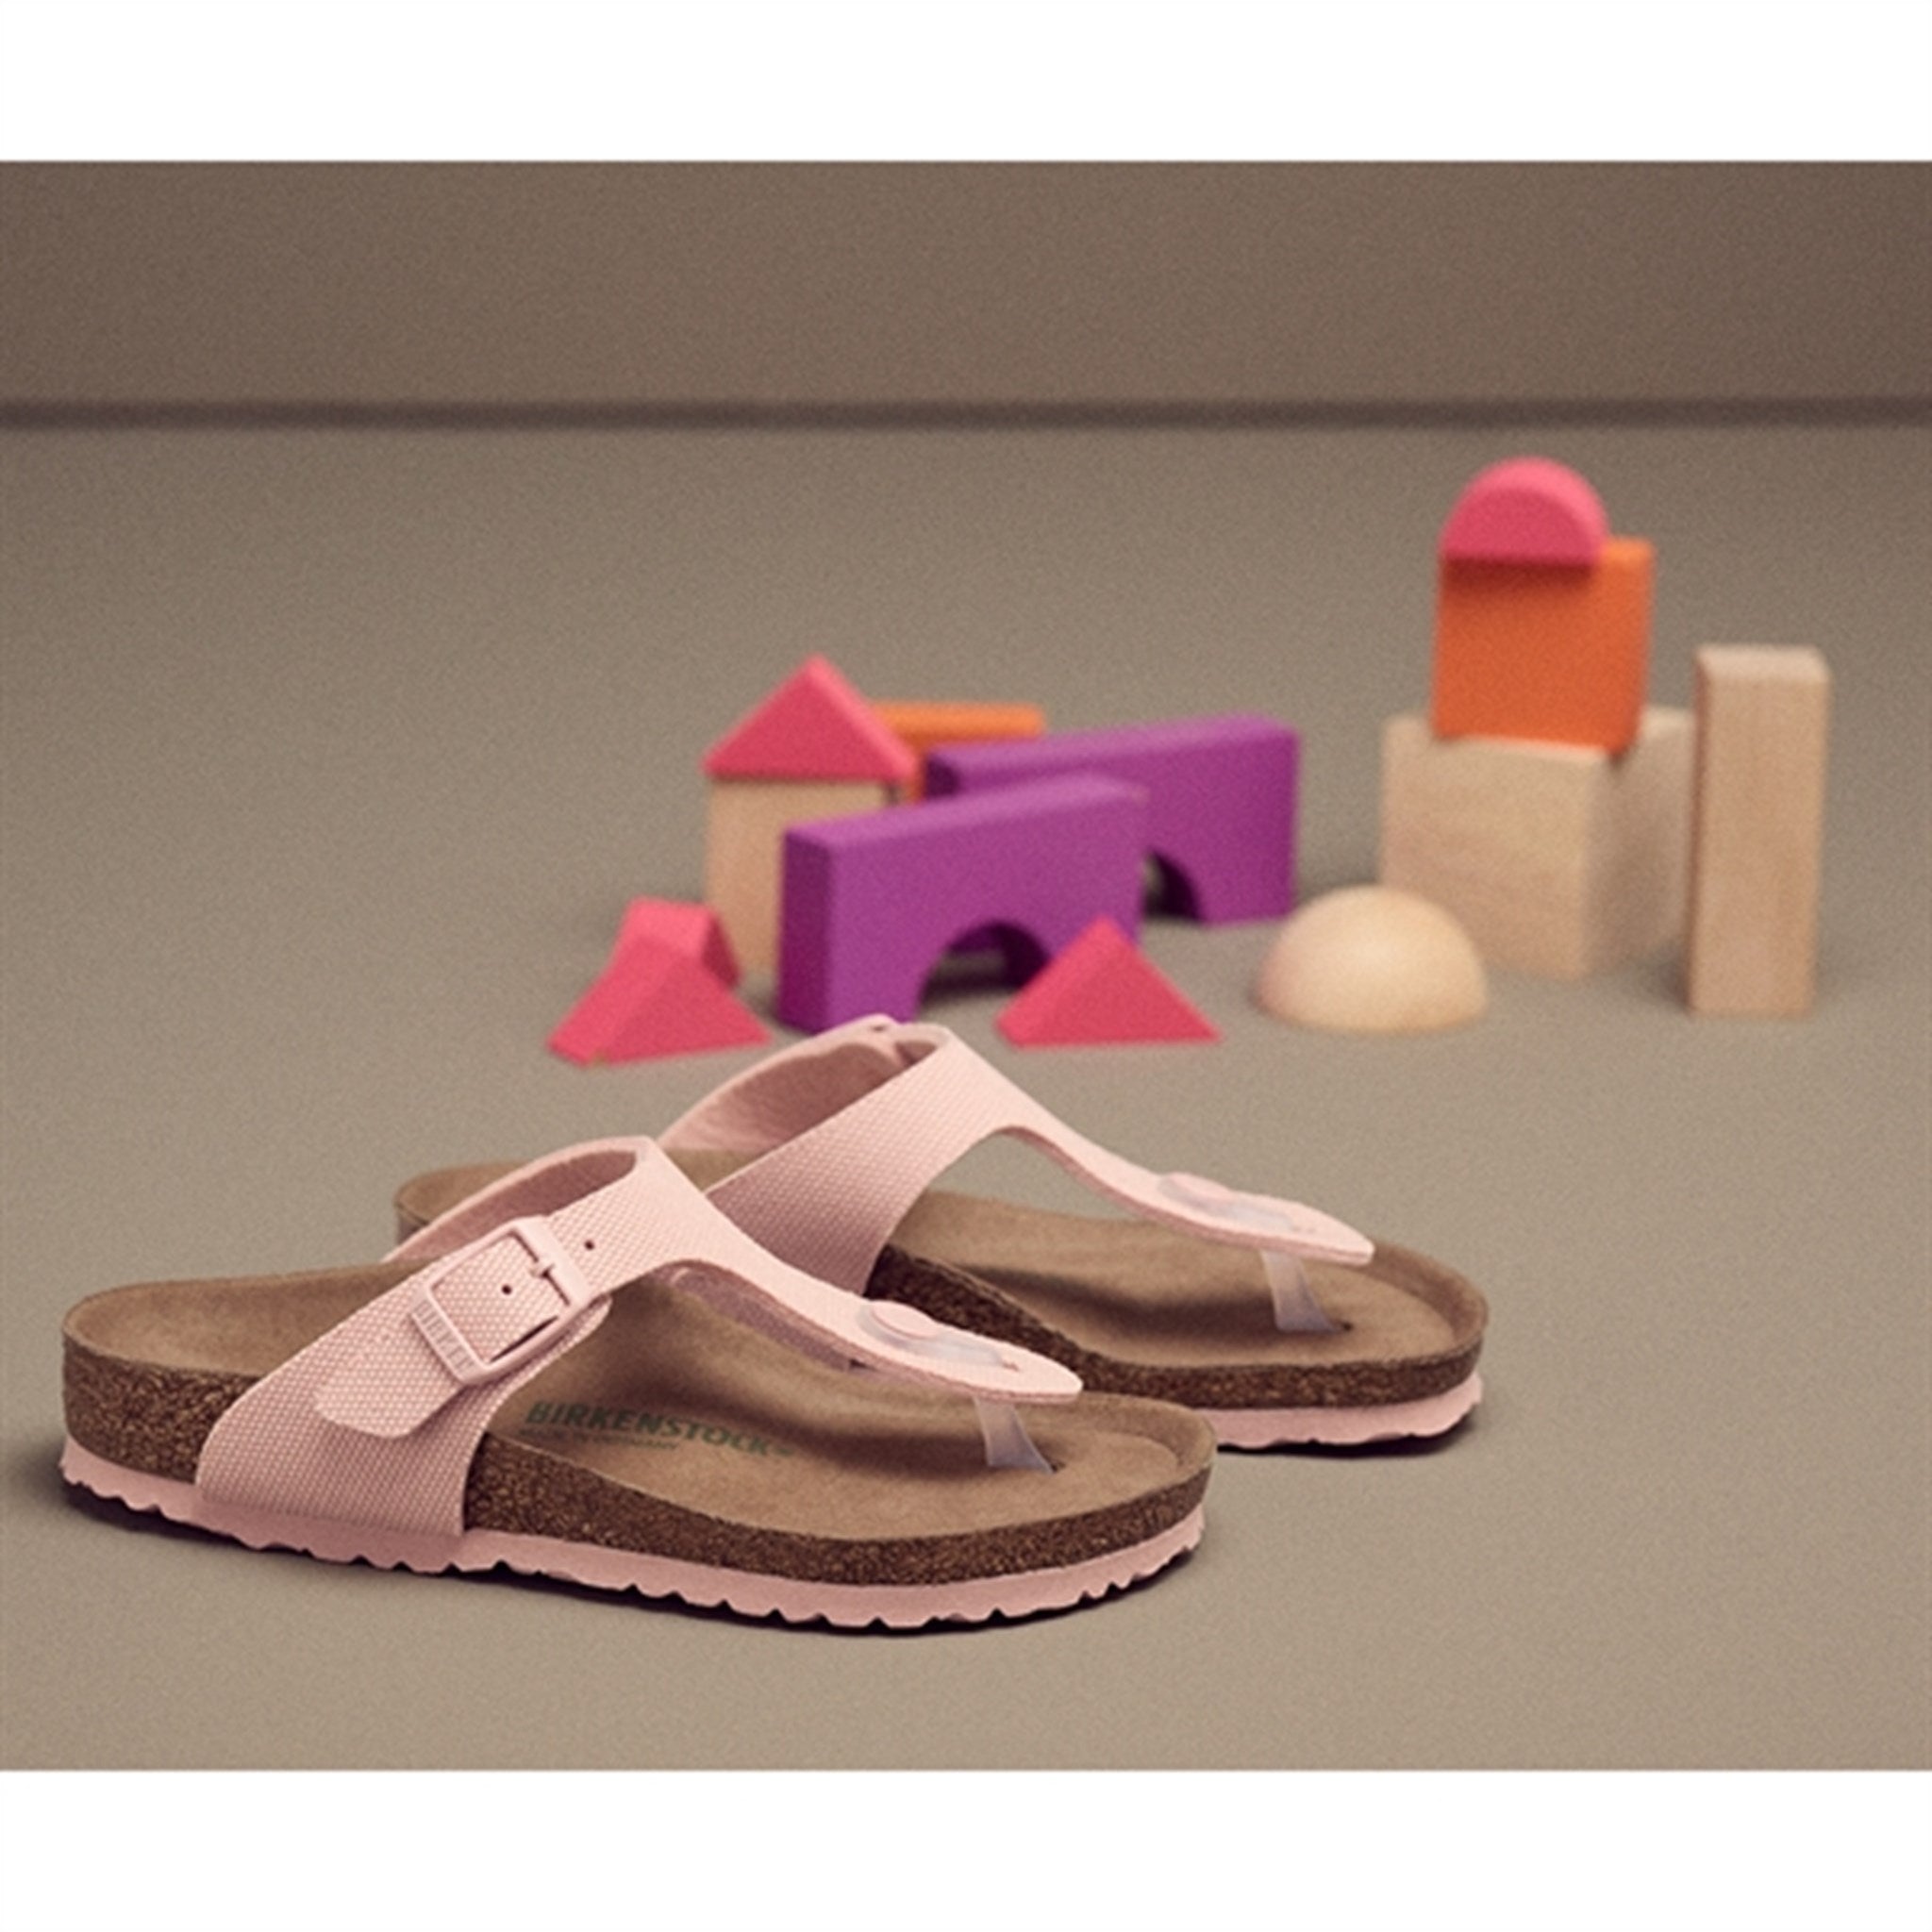 Birkenstock Gizeh Kids TEX Canvas Soft Pink Sandals 5